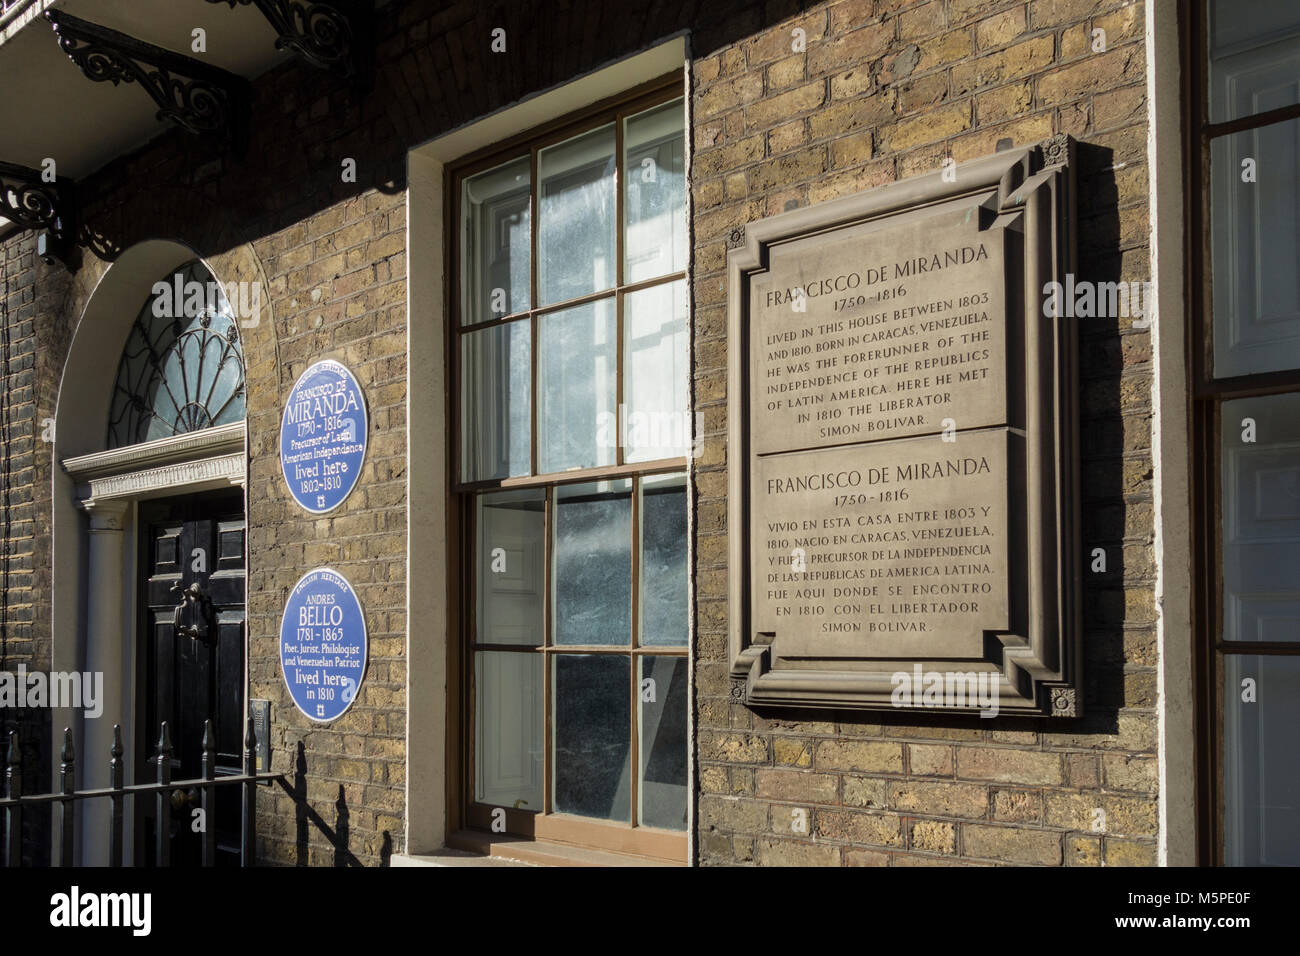 Francisco De Miranda and Andres Bello blue plaques outside Francisco de Miranda House on Grafton Way, London, NW1, UK Stock Photo